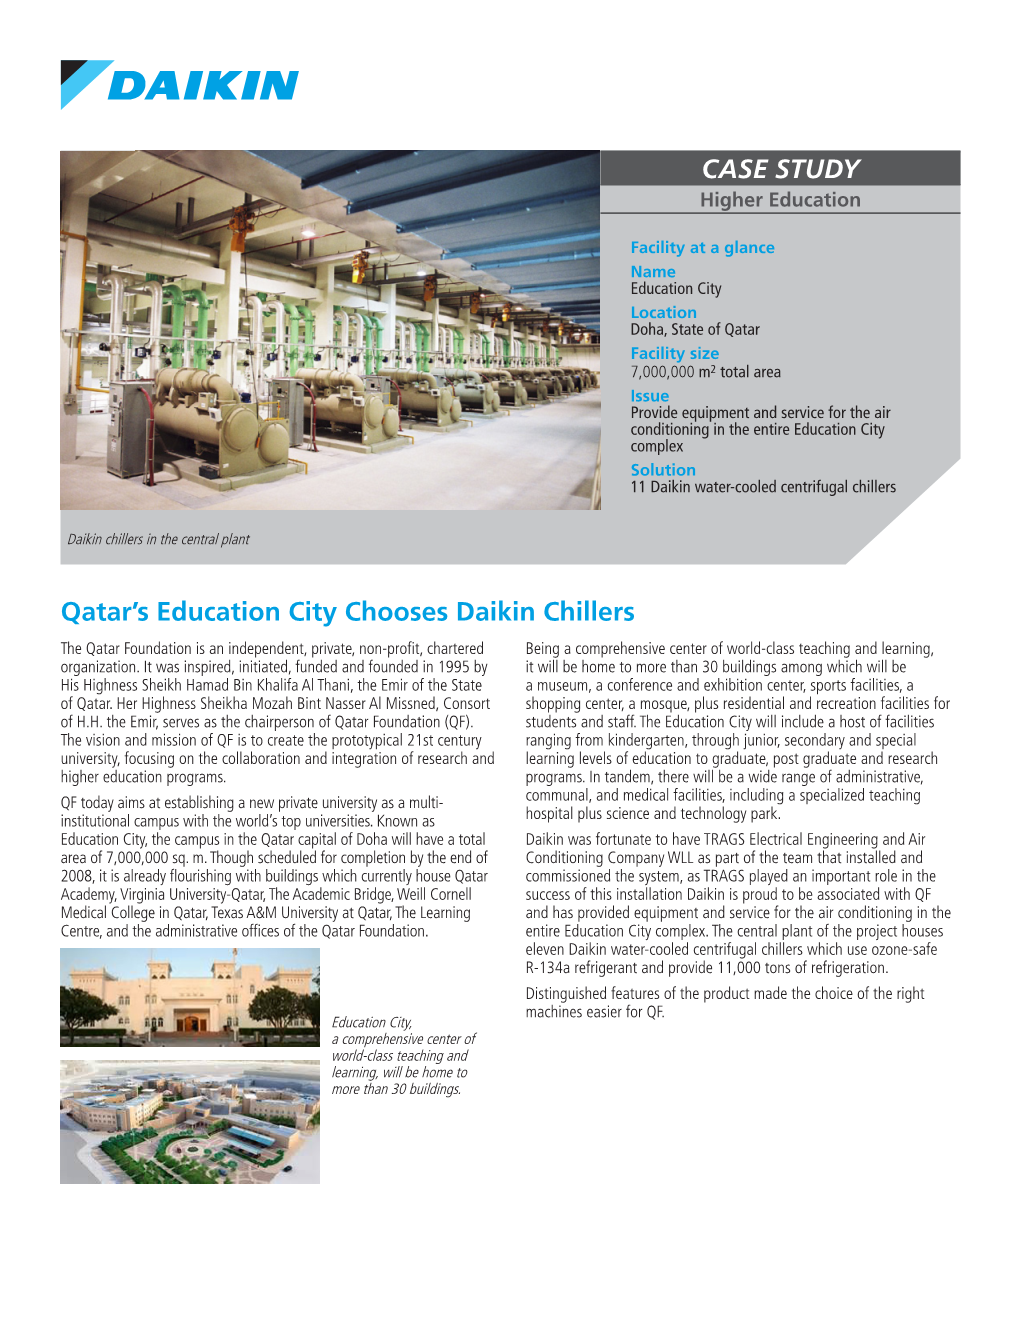 Qatar Education City Case Study